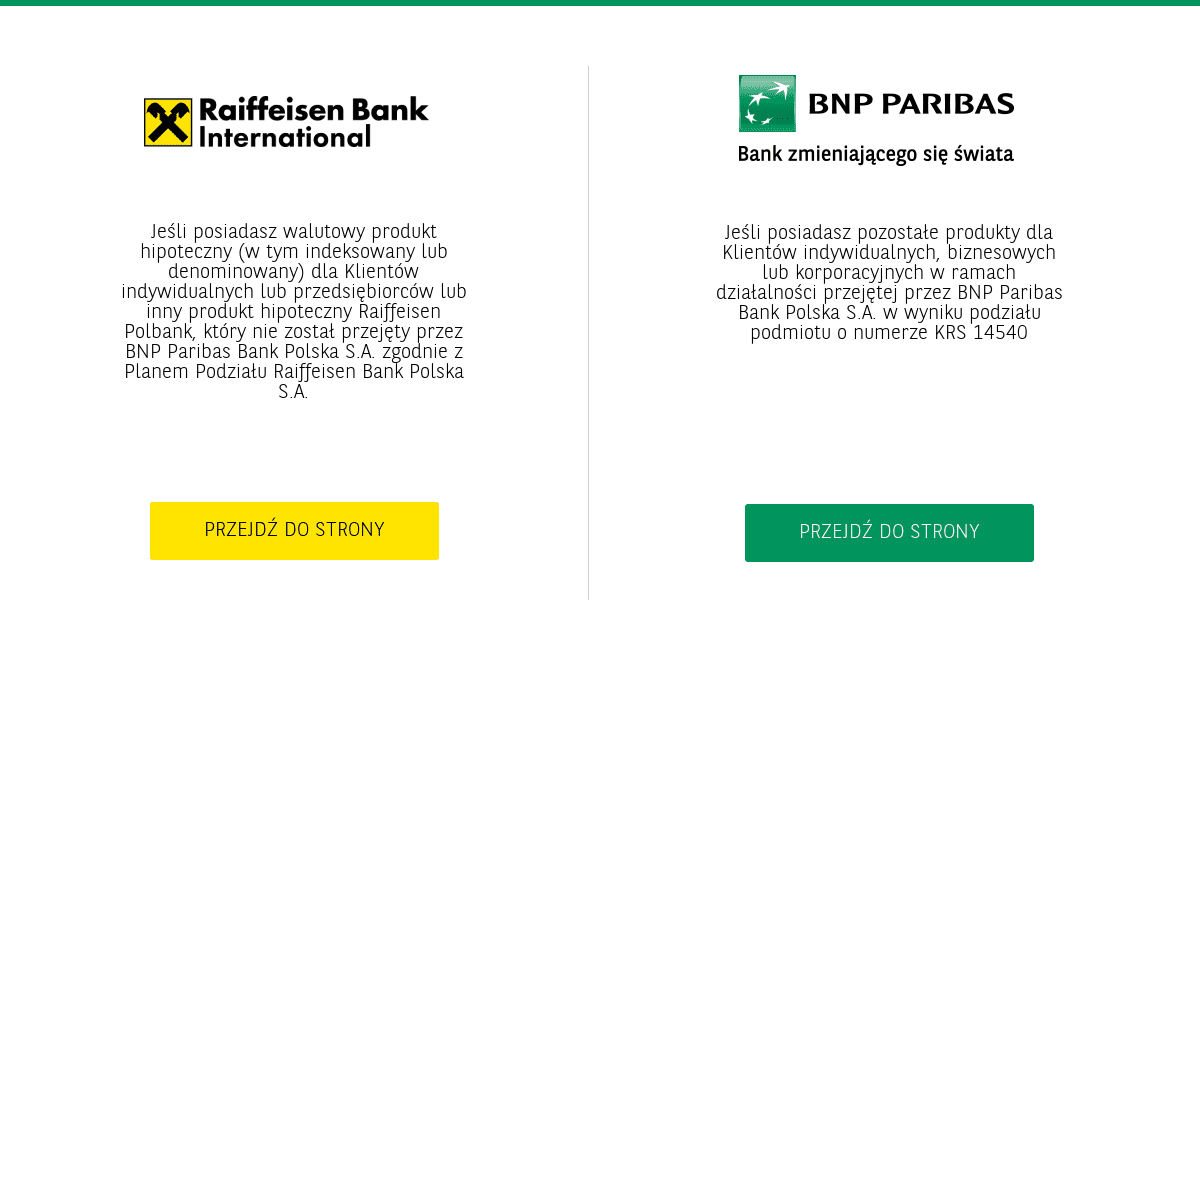 A complete backup of raiffeisenpolbank.com